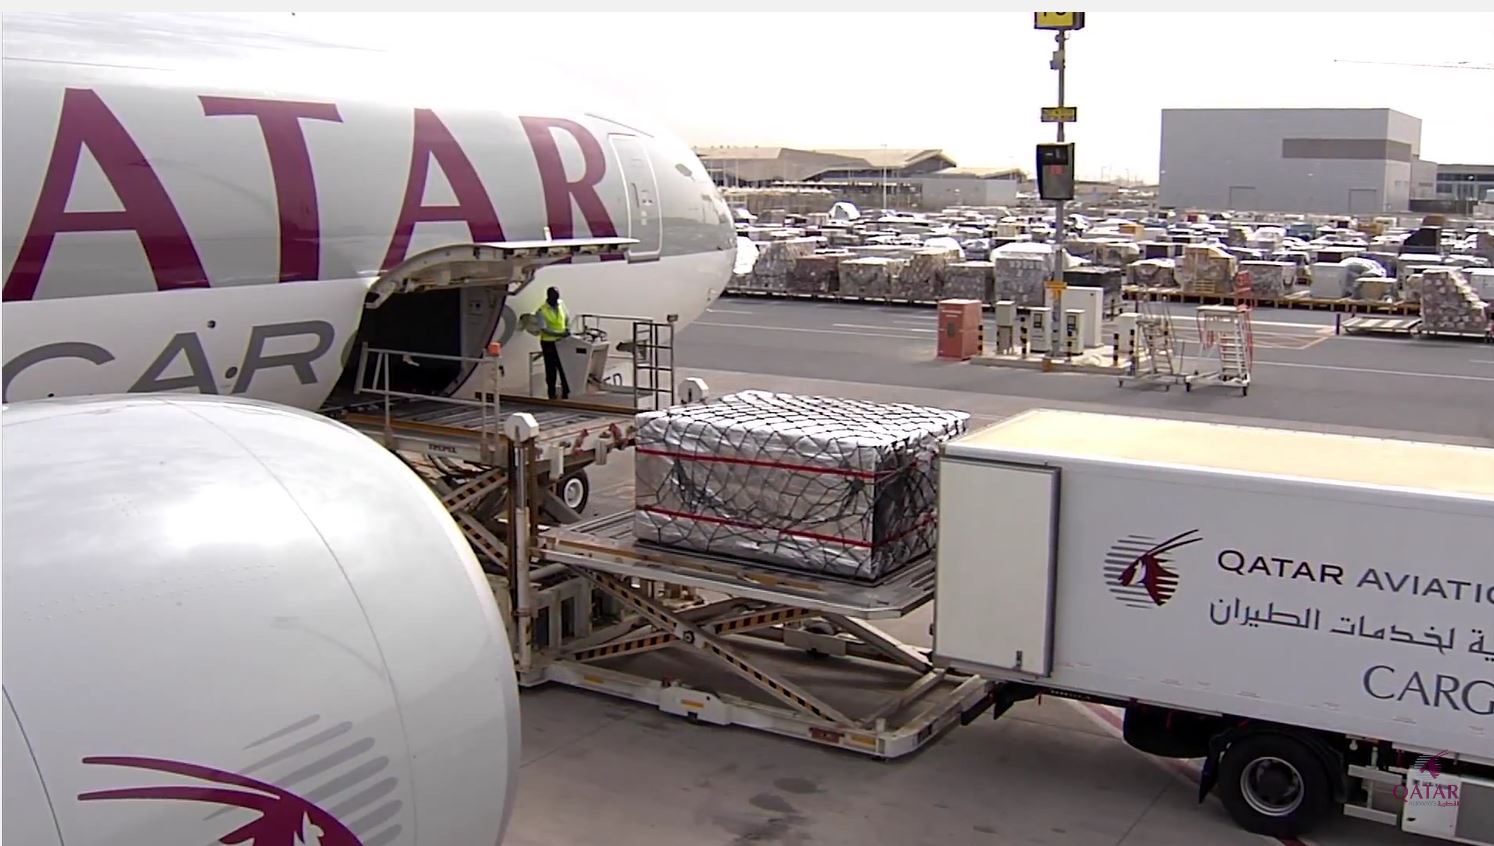 Qatar Airways Cargo – World-class cargo facility at Hamad International Airport